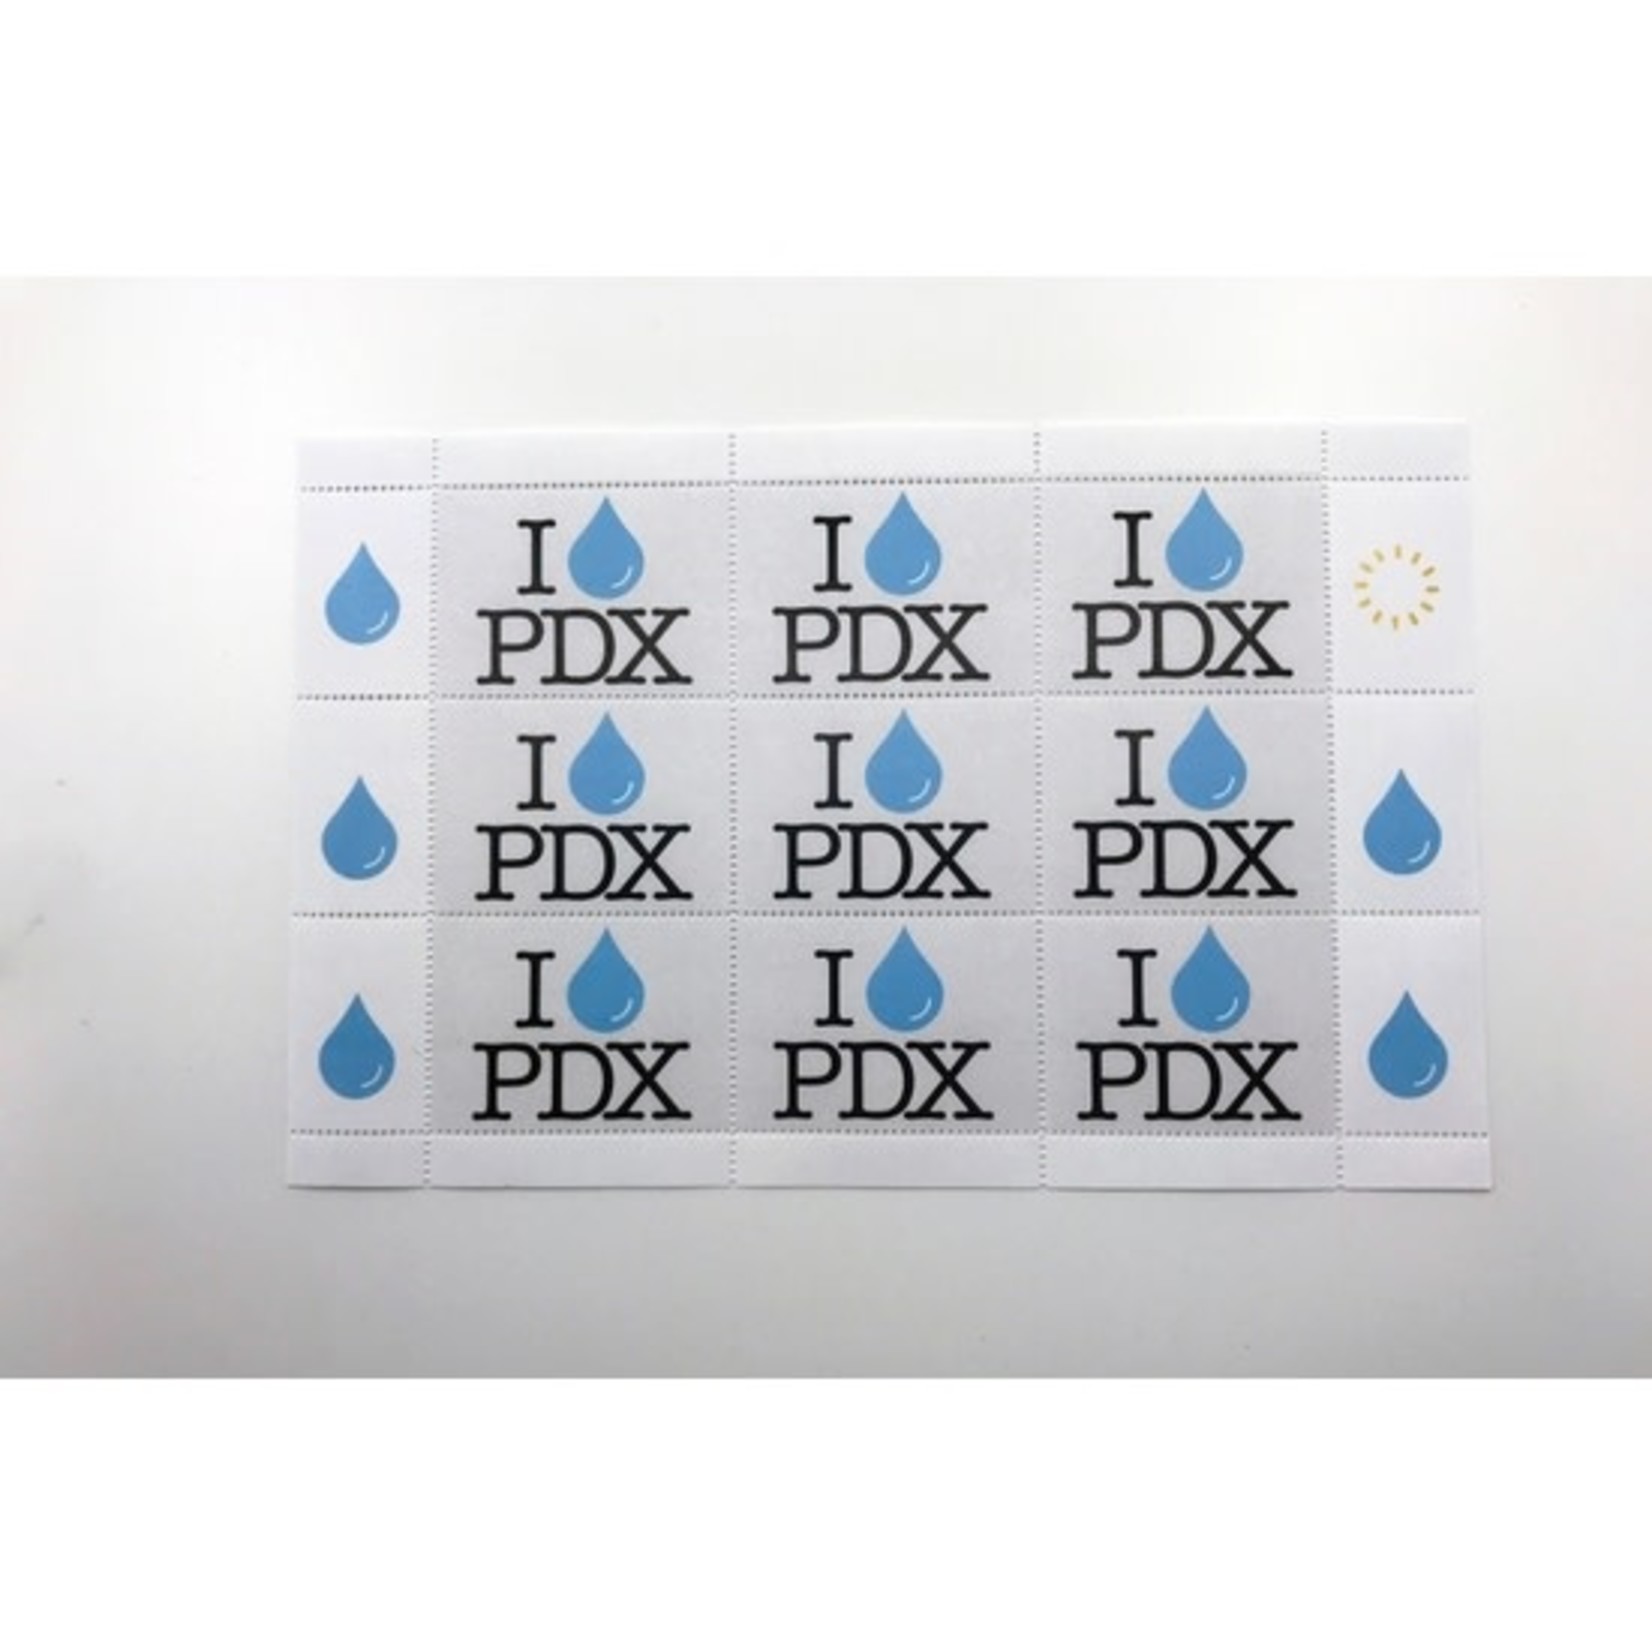 Notions I Raindrop PDX Stamp Sheet